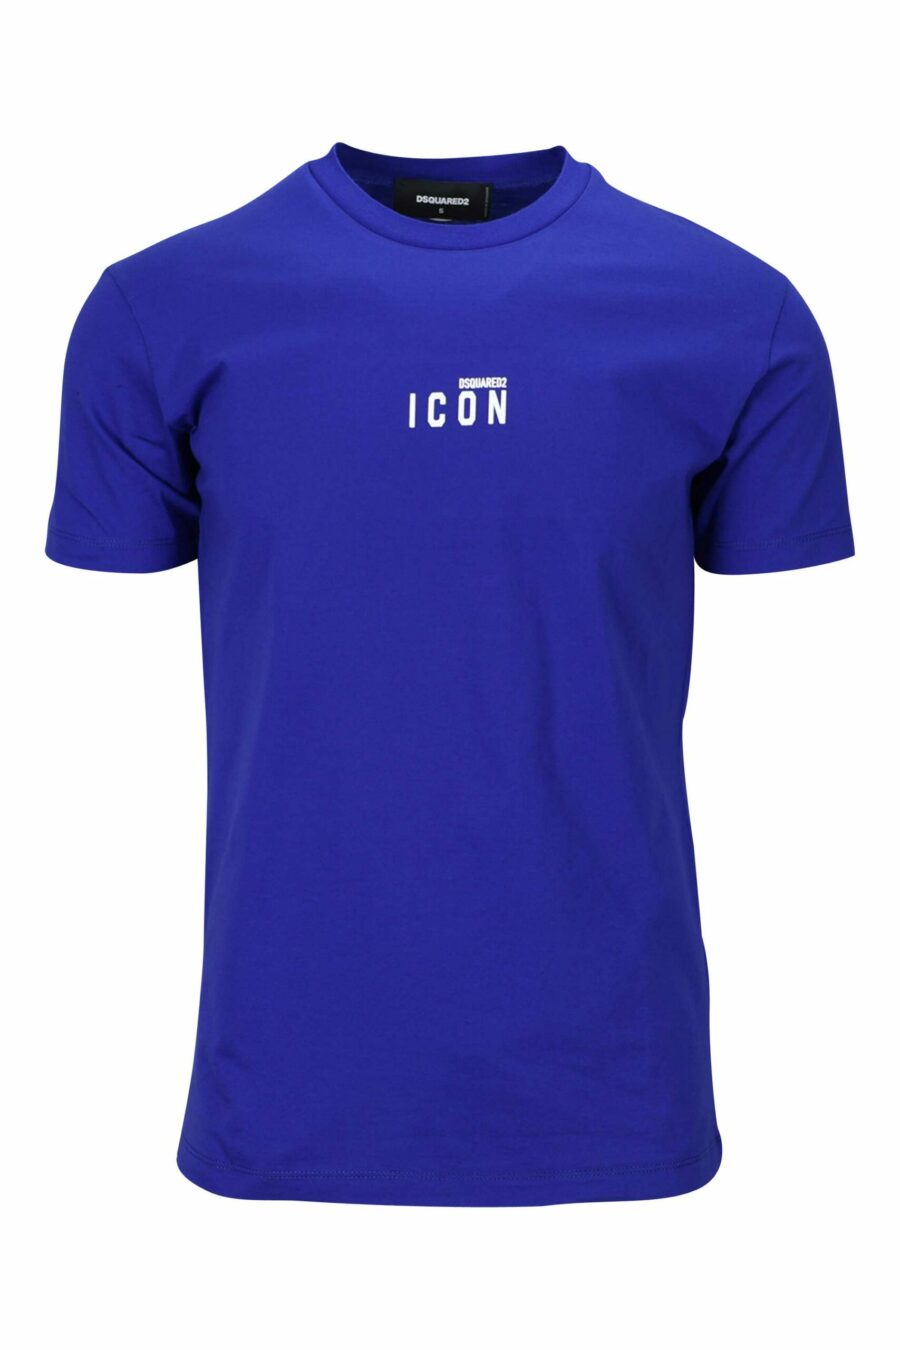 Dunkelblaues T-Shirt mit Minilogue "Ikone" - 8054148021160 skaliert